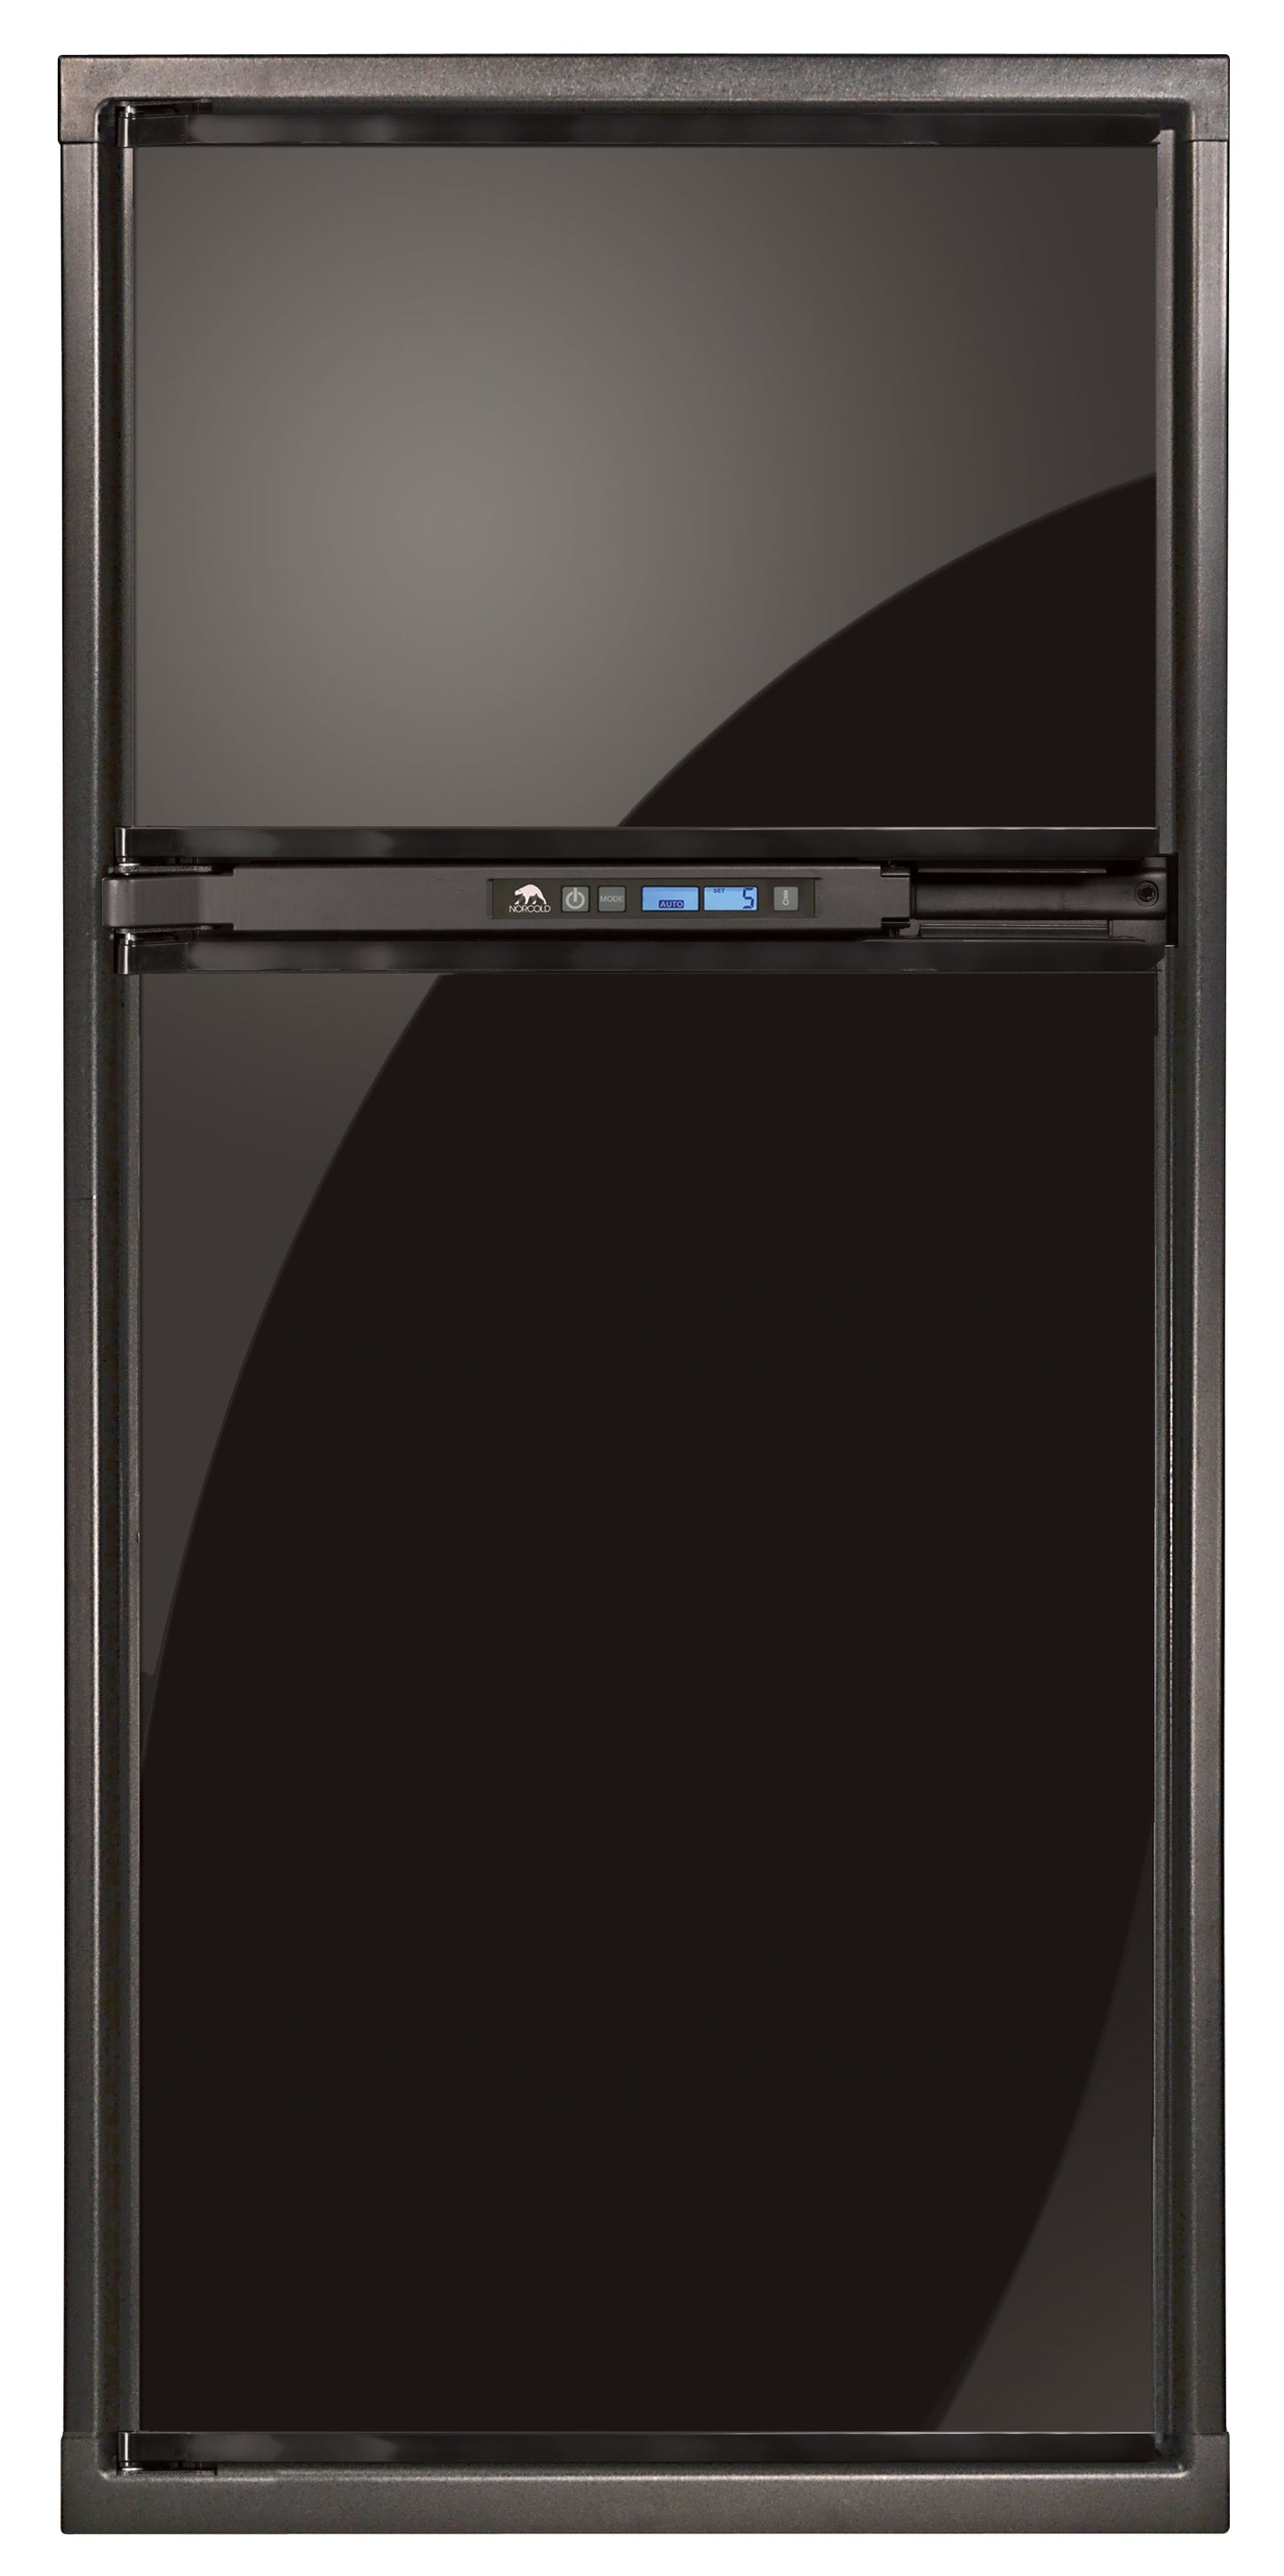 Norcold NA7LXL Dual Compartment 2 Door Refrigerator With Freezer - N6DNA7LXL